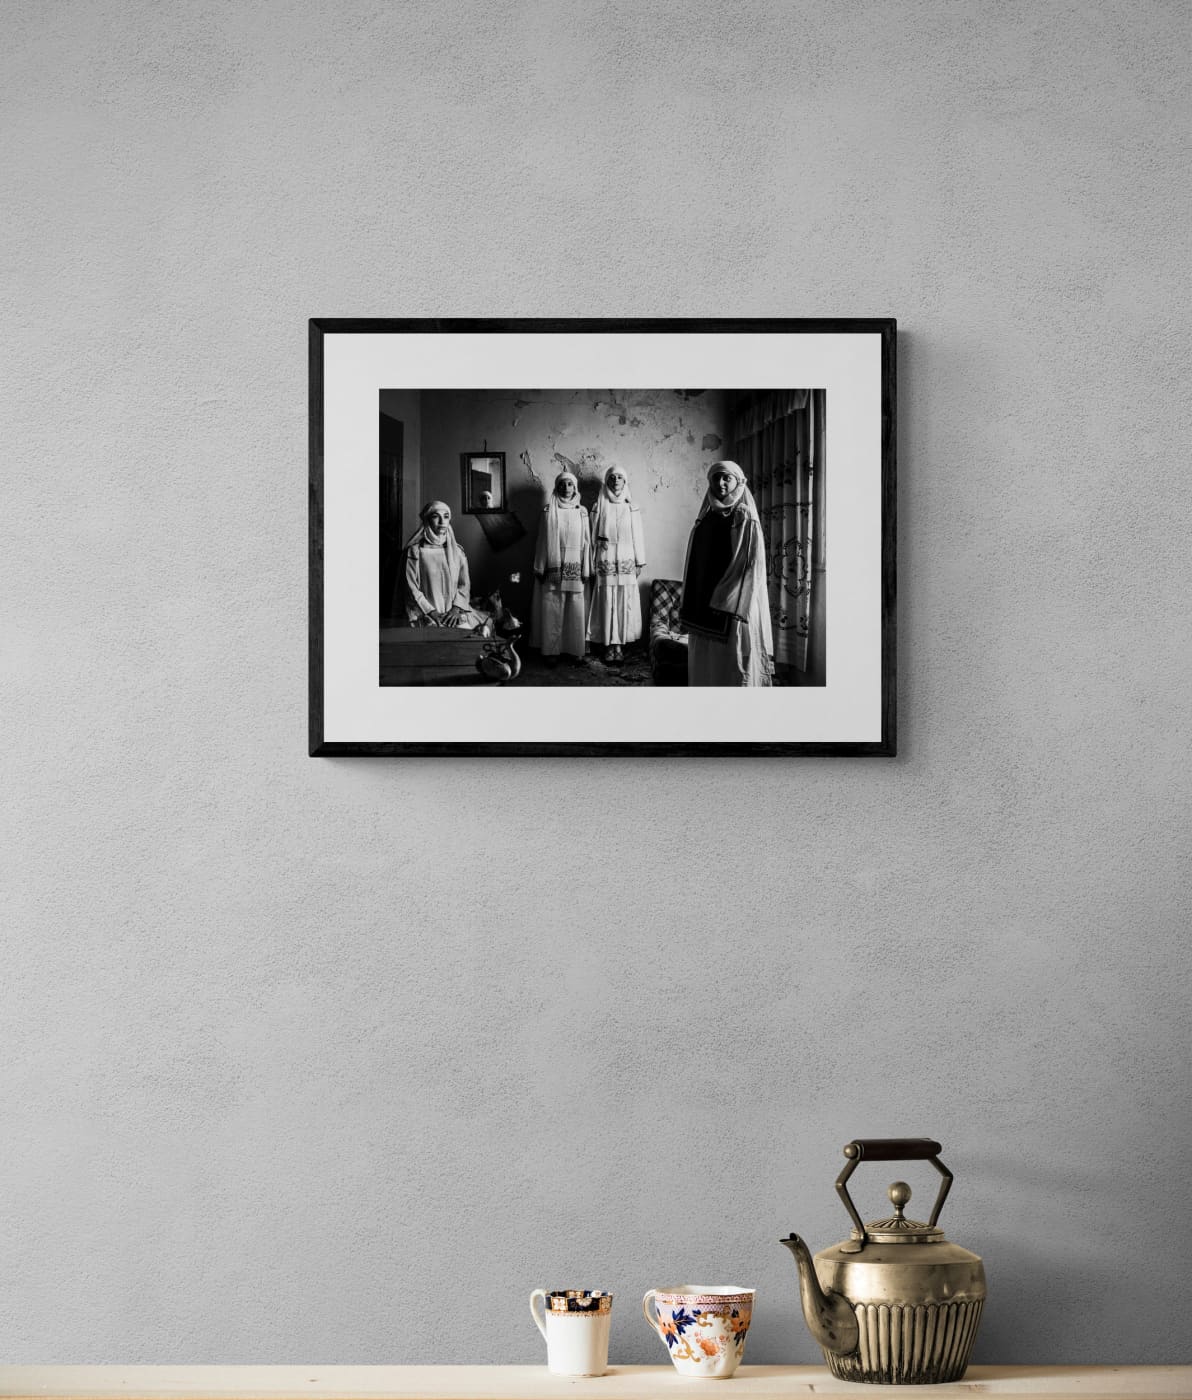 Black and White Photography Wall Art Greece | Kallimassia costumes Ionia Chios island Greece by George Tatakis - single framed photo